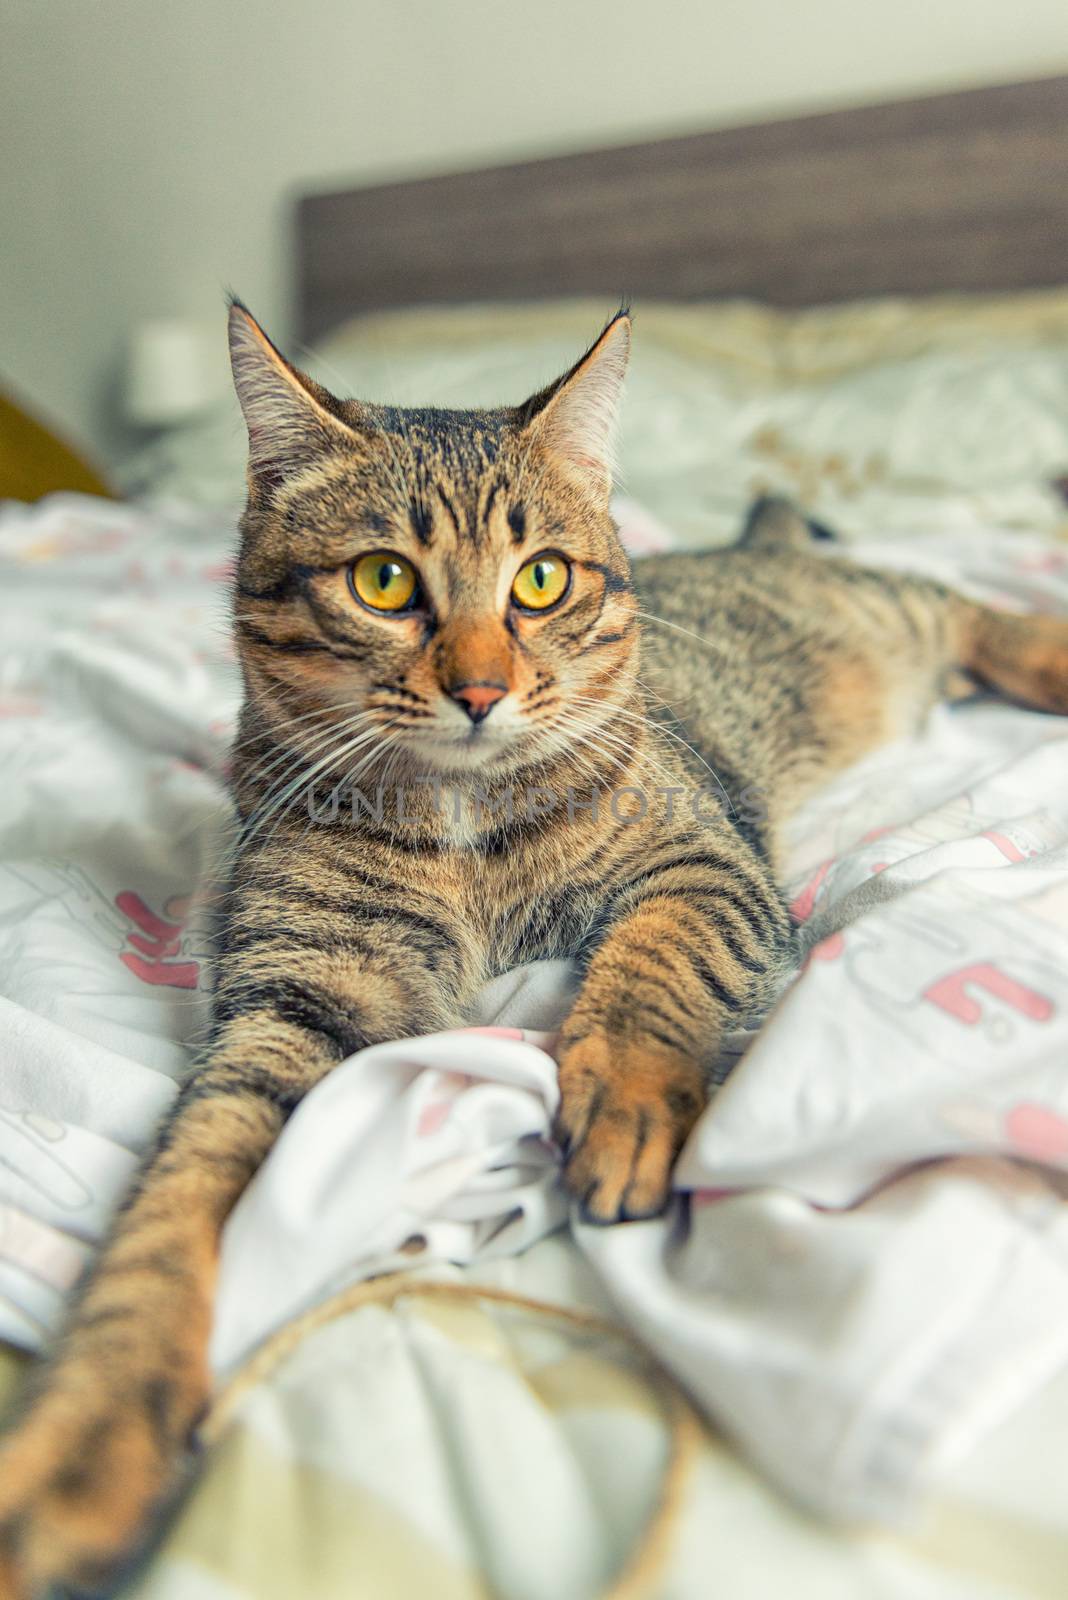 Tabby cat plays on bed by jordygraph